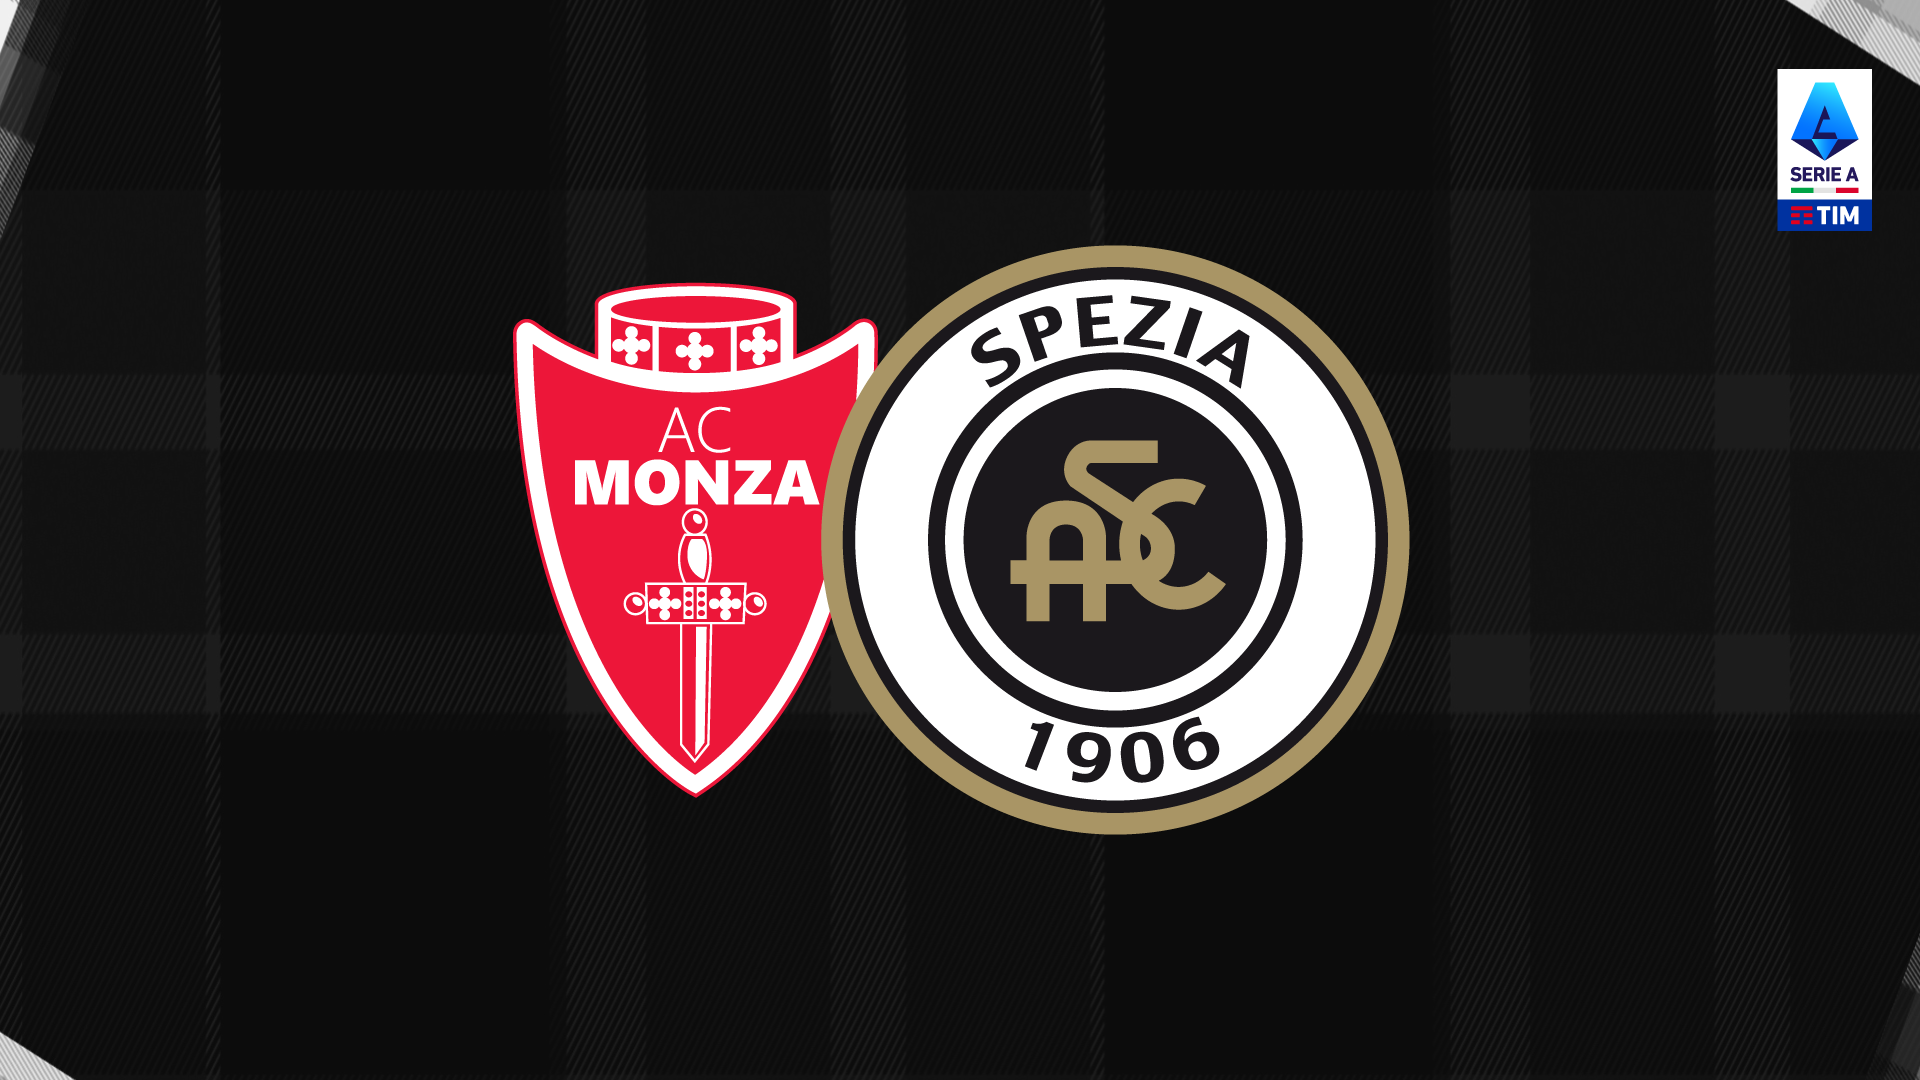 Serie A TIM: Monza-Spezia 2-0